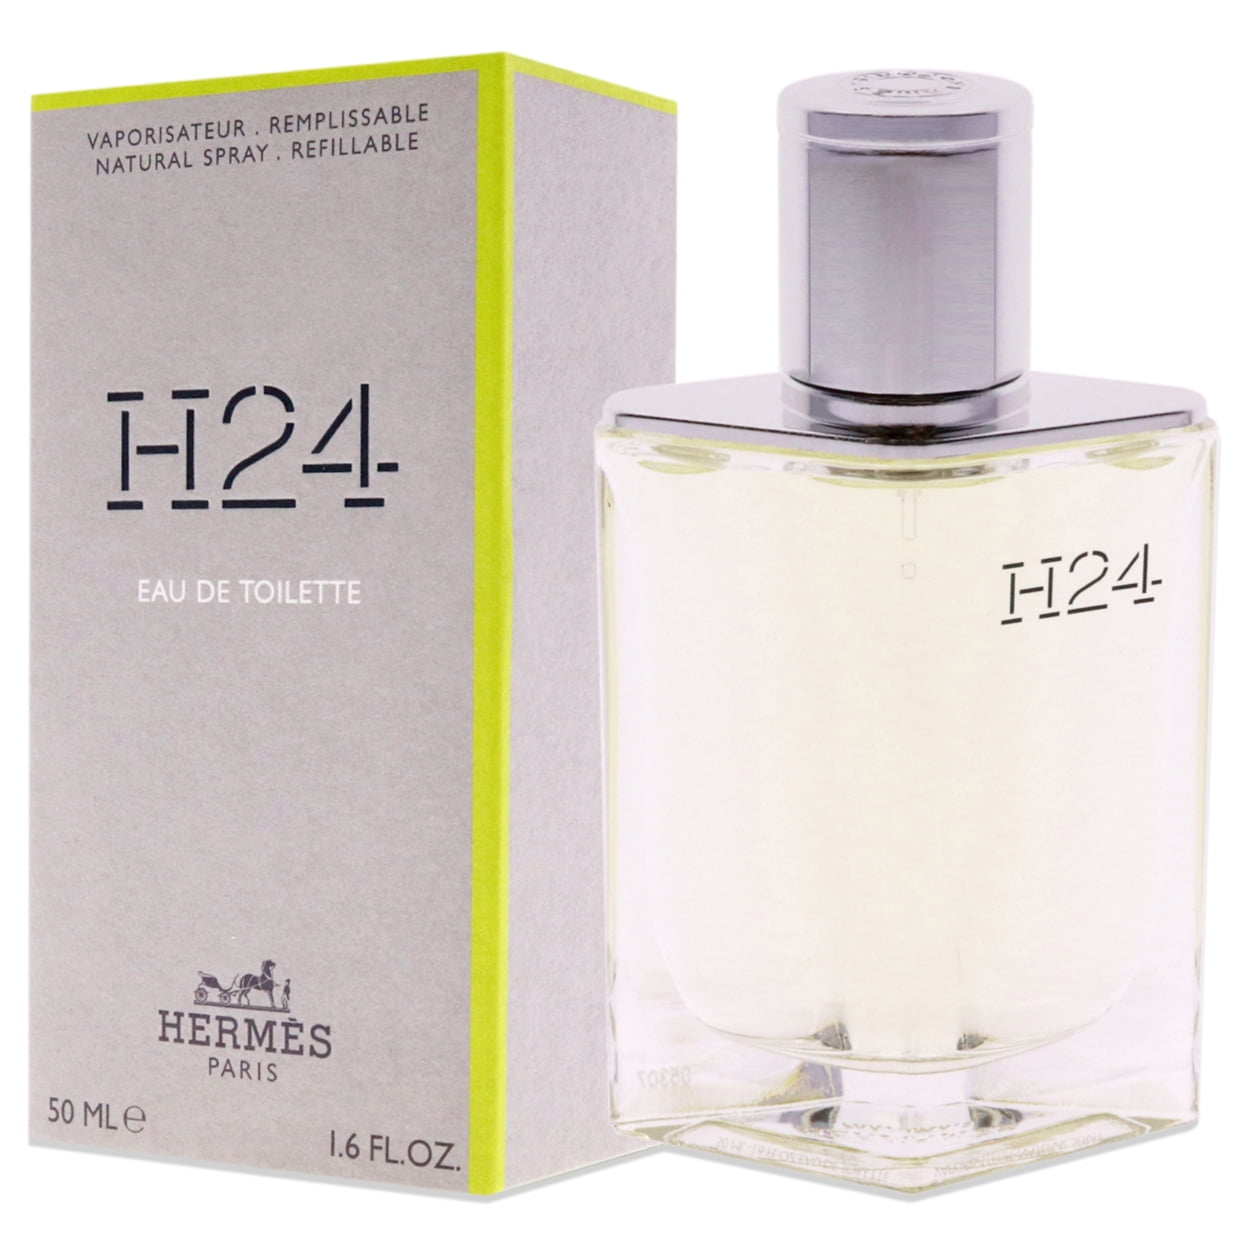 H24 moisturizing face cream - 3.38 fl.oz